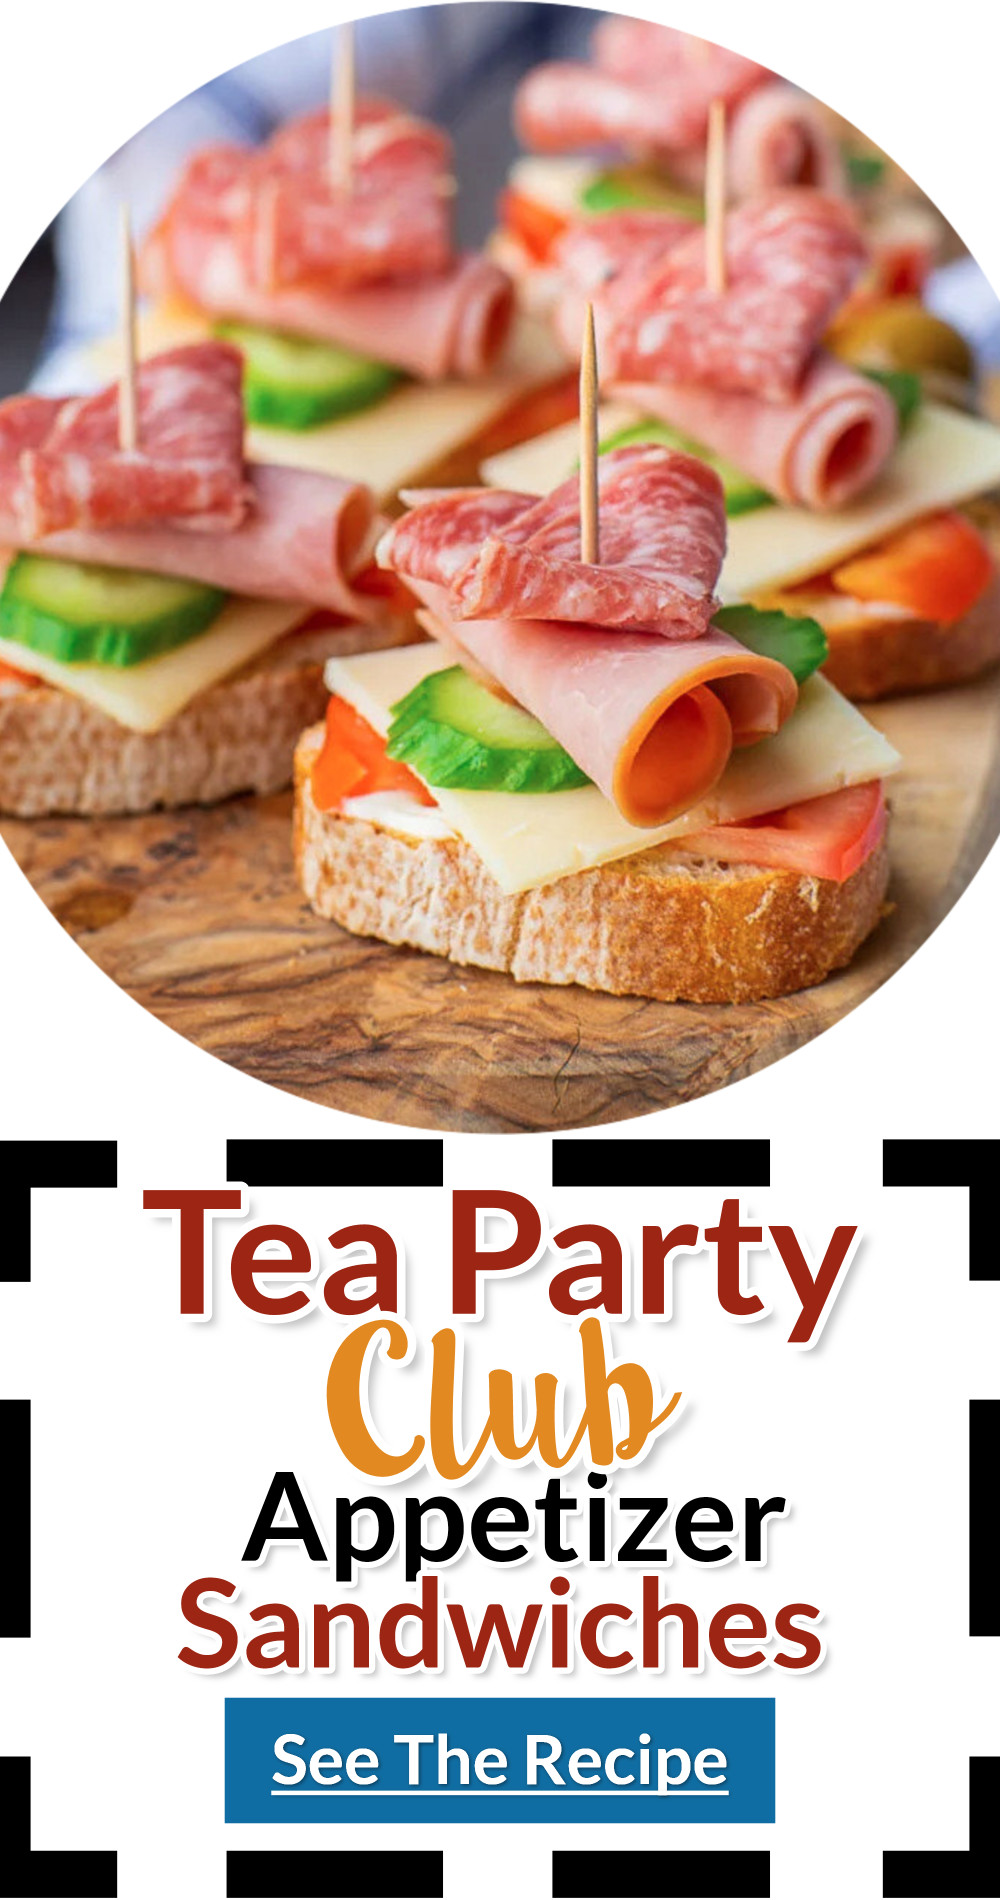 Tea Party Club Appetizer Sandwiches Recipes